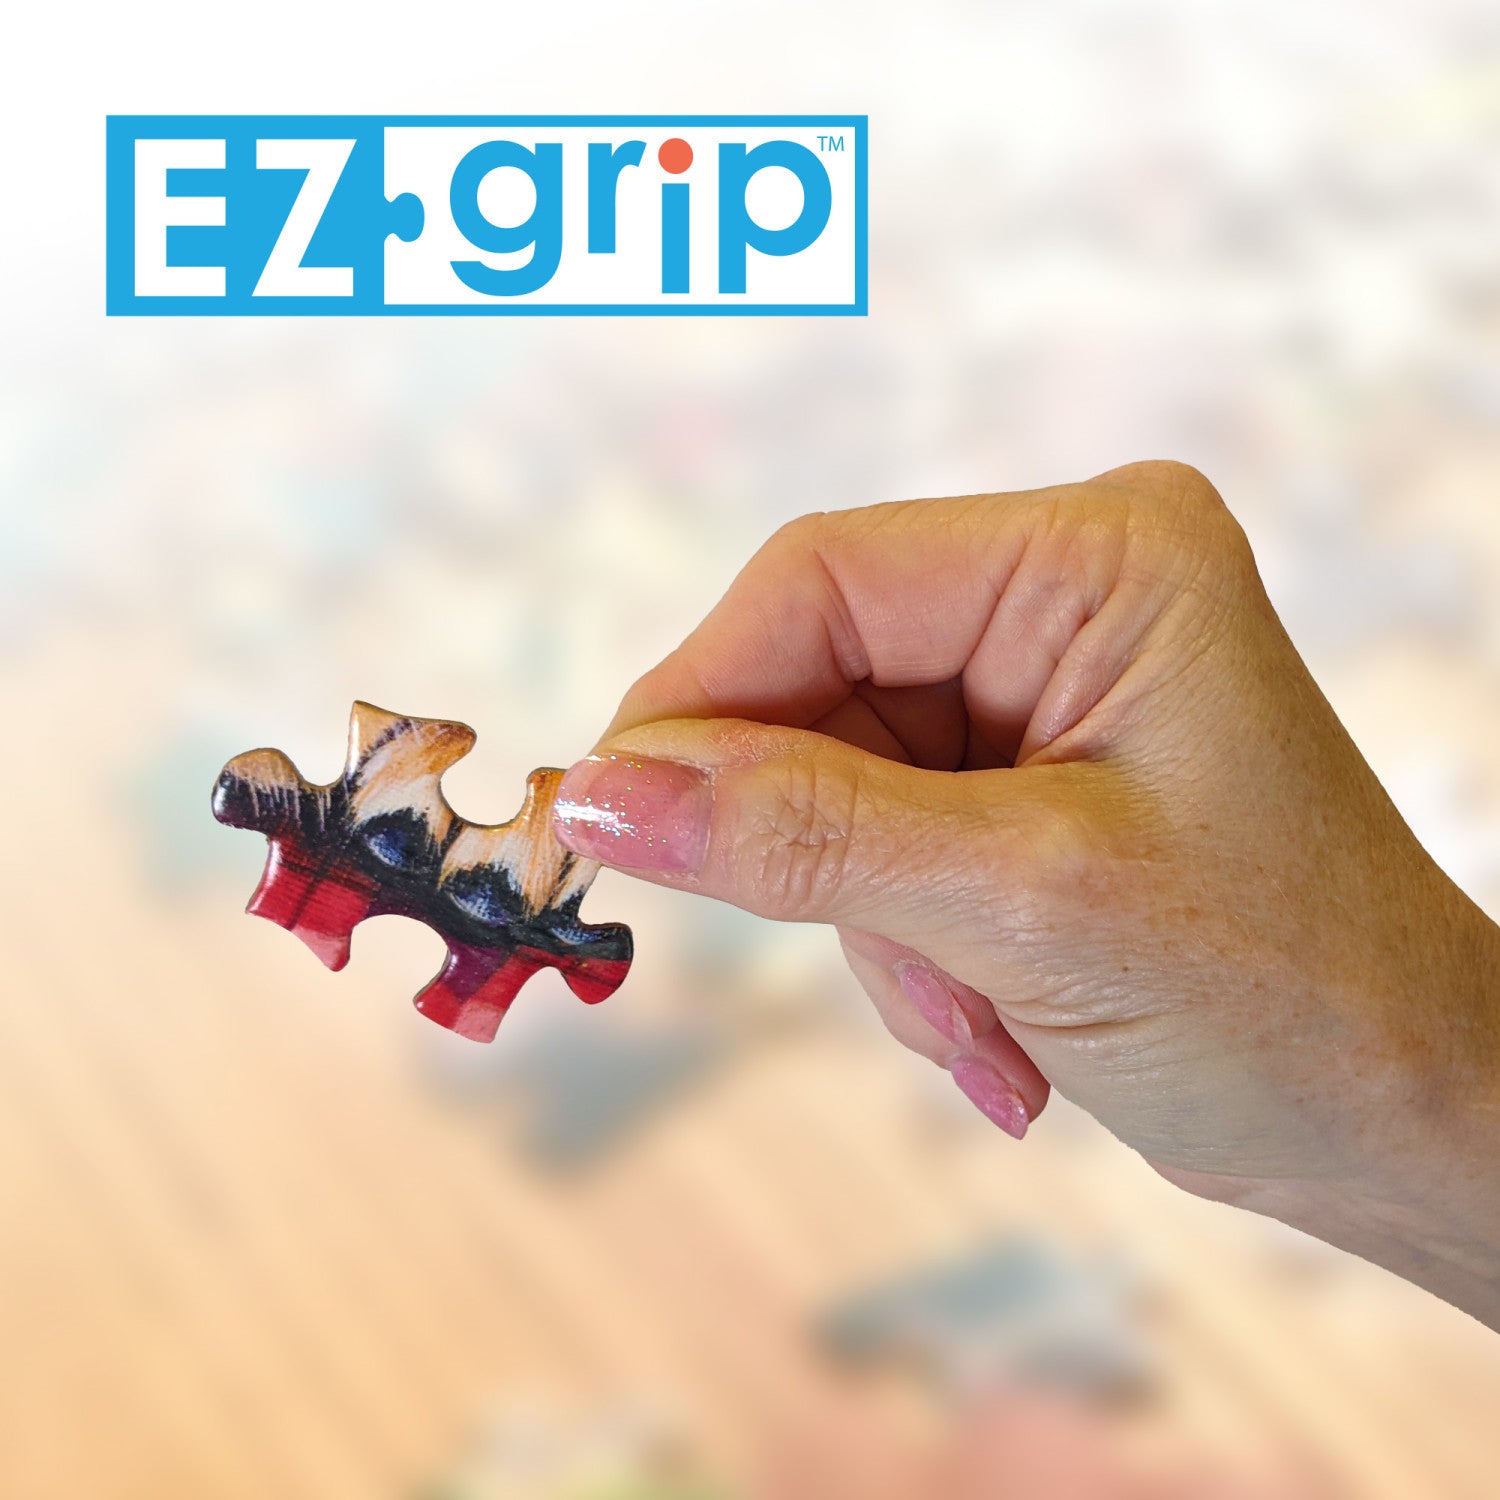 Green Acres - Afternoon Siesta 300 Piece EZ Grip Jigsaw Puzzle